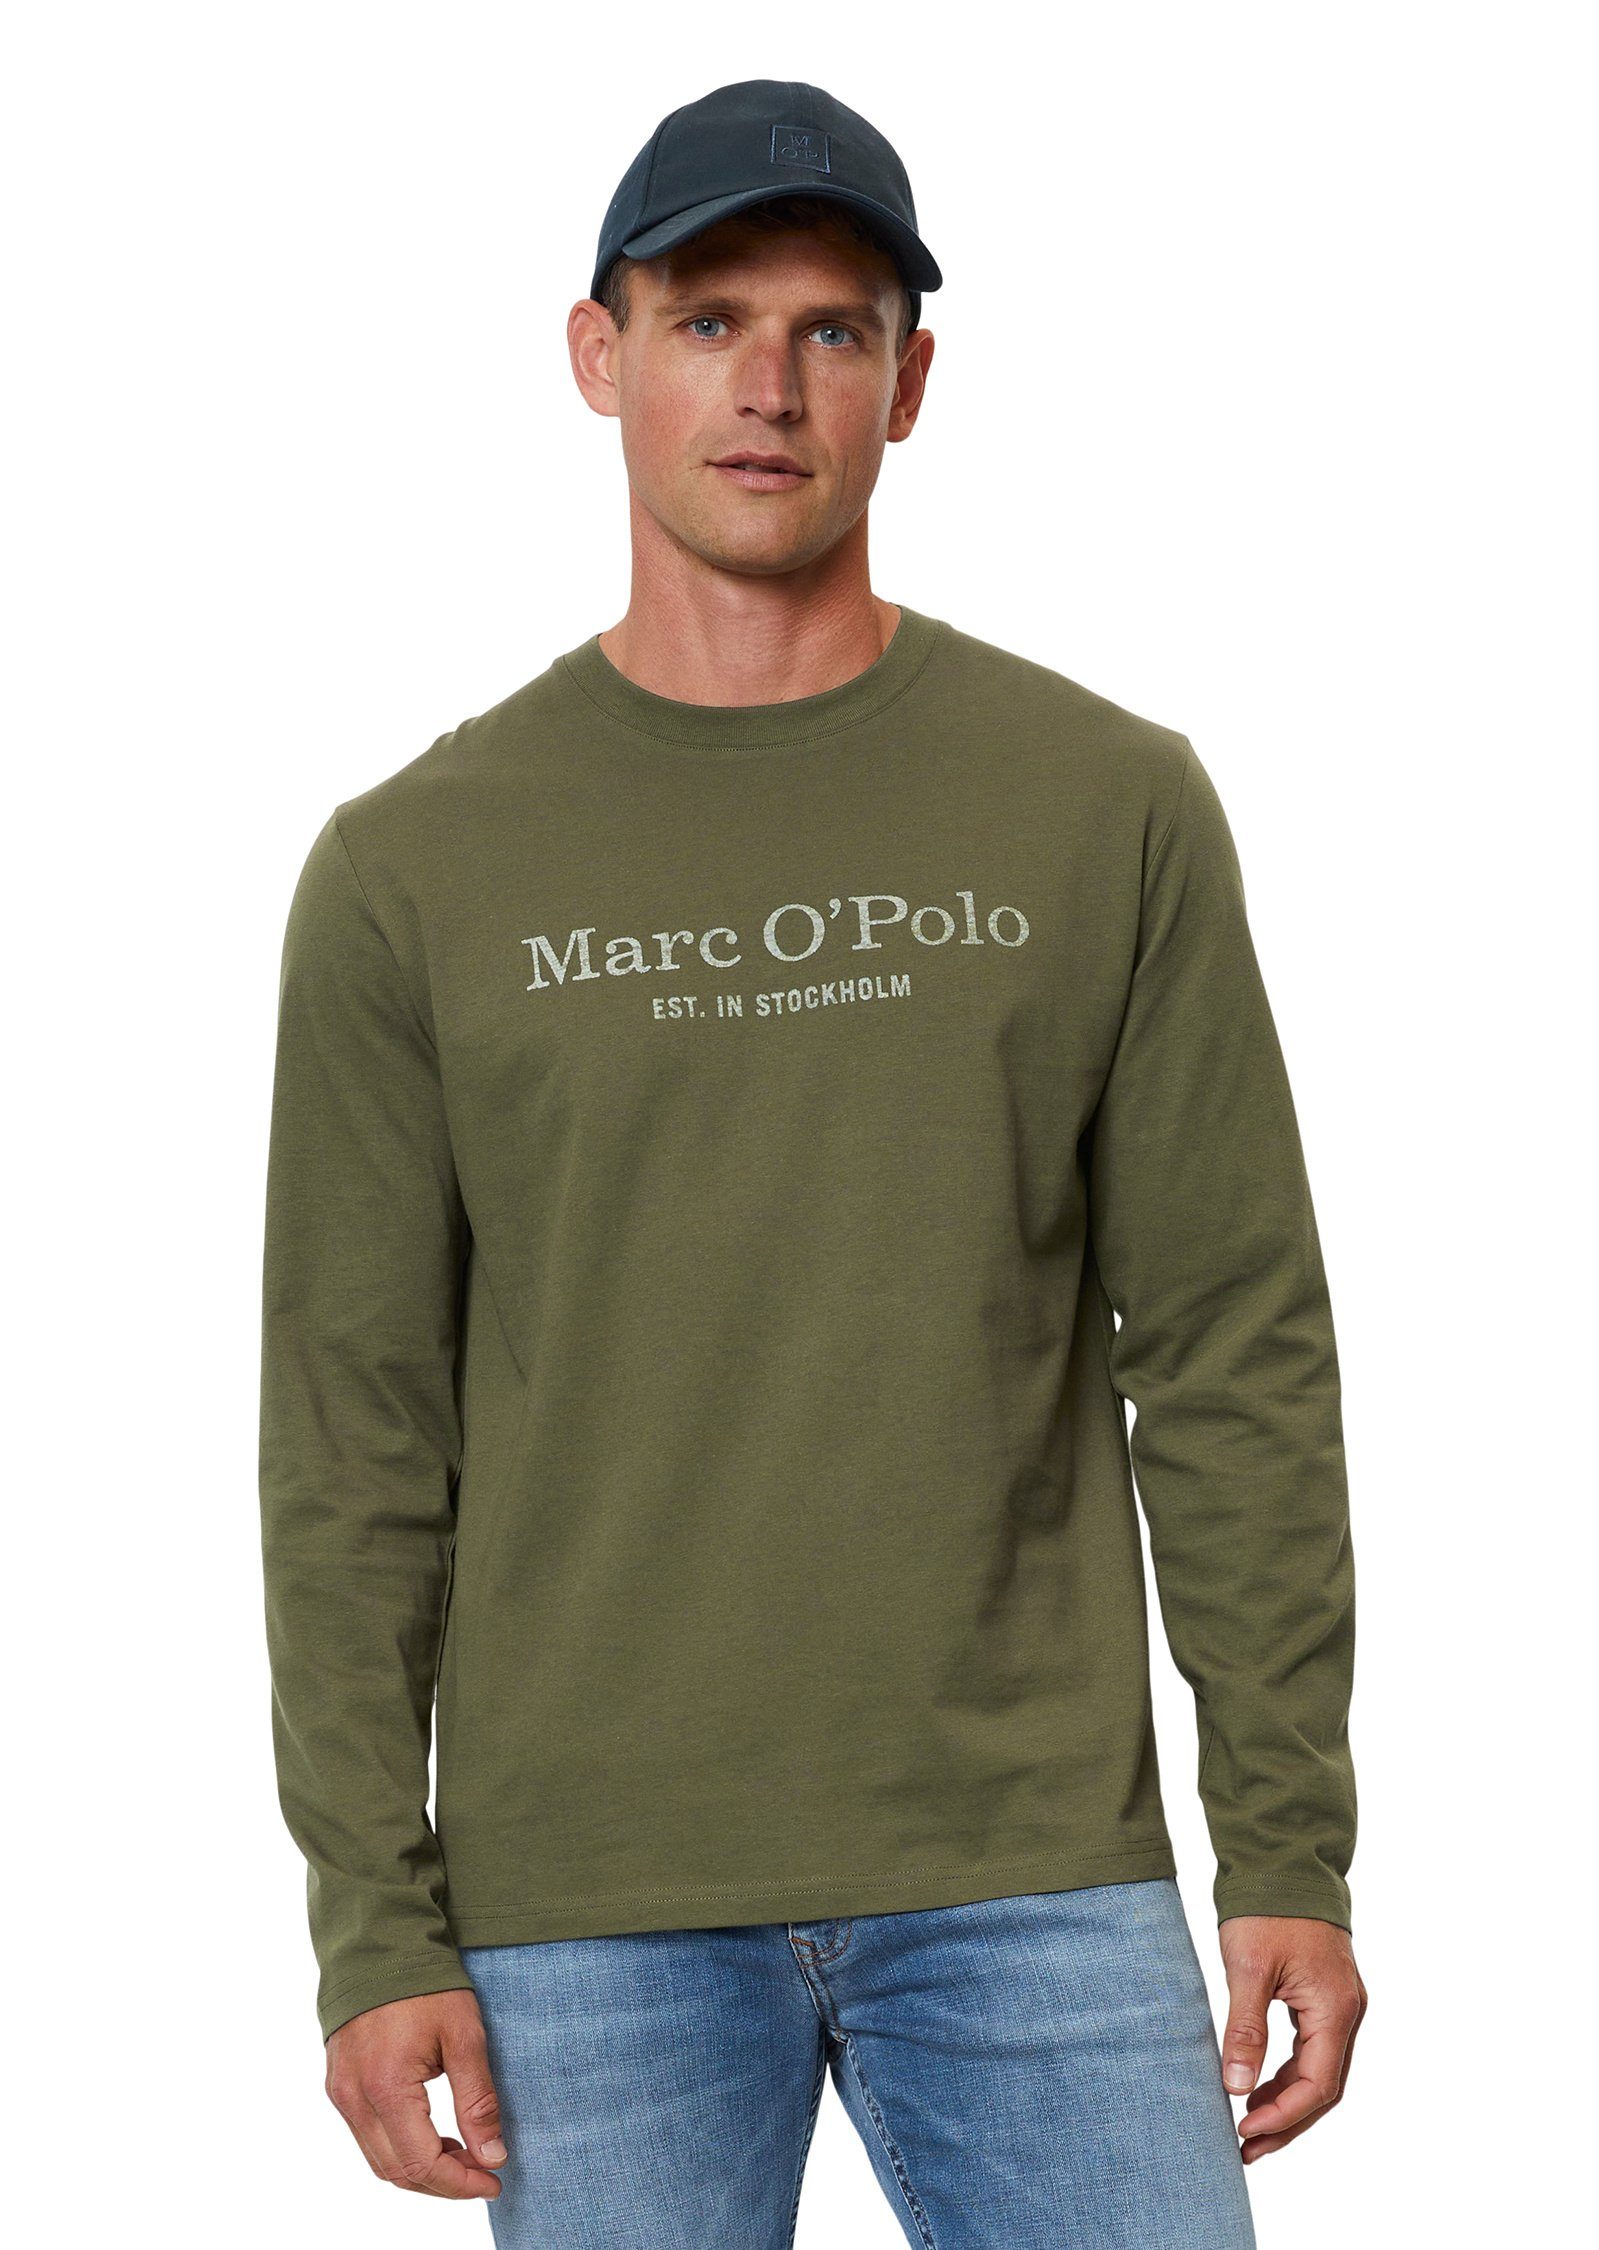 Marc O'Polo Langarmshirt aus grün Bio-Baumwolle hochwertiger